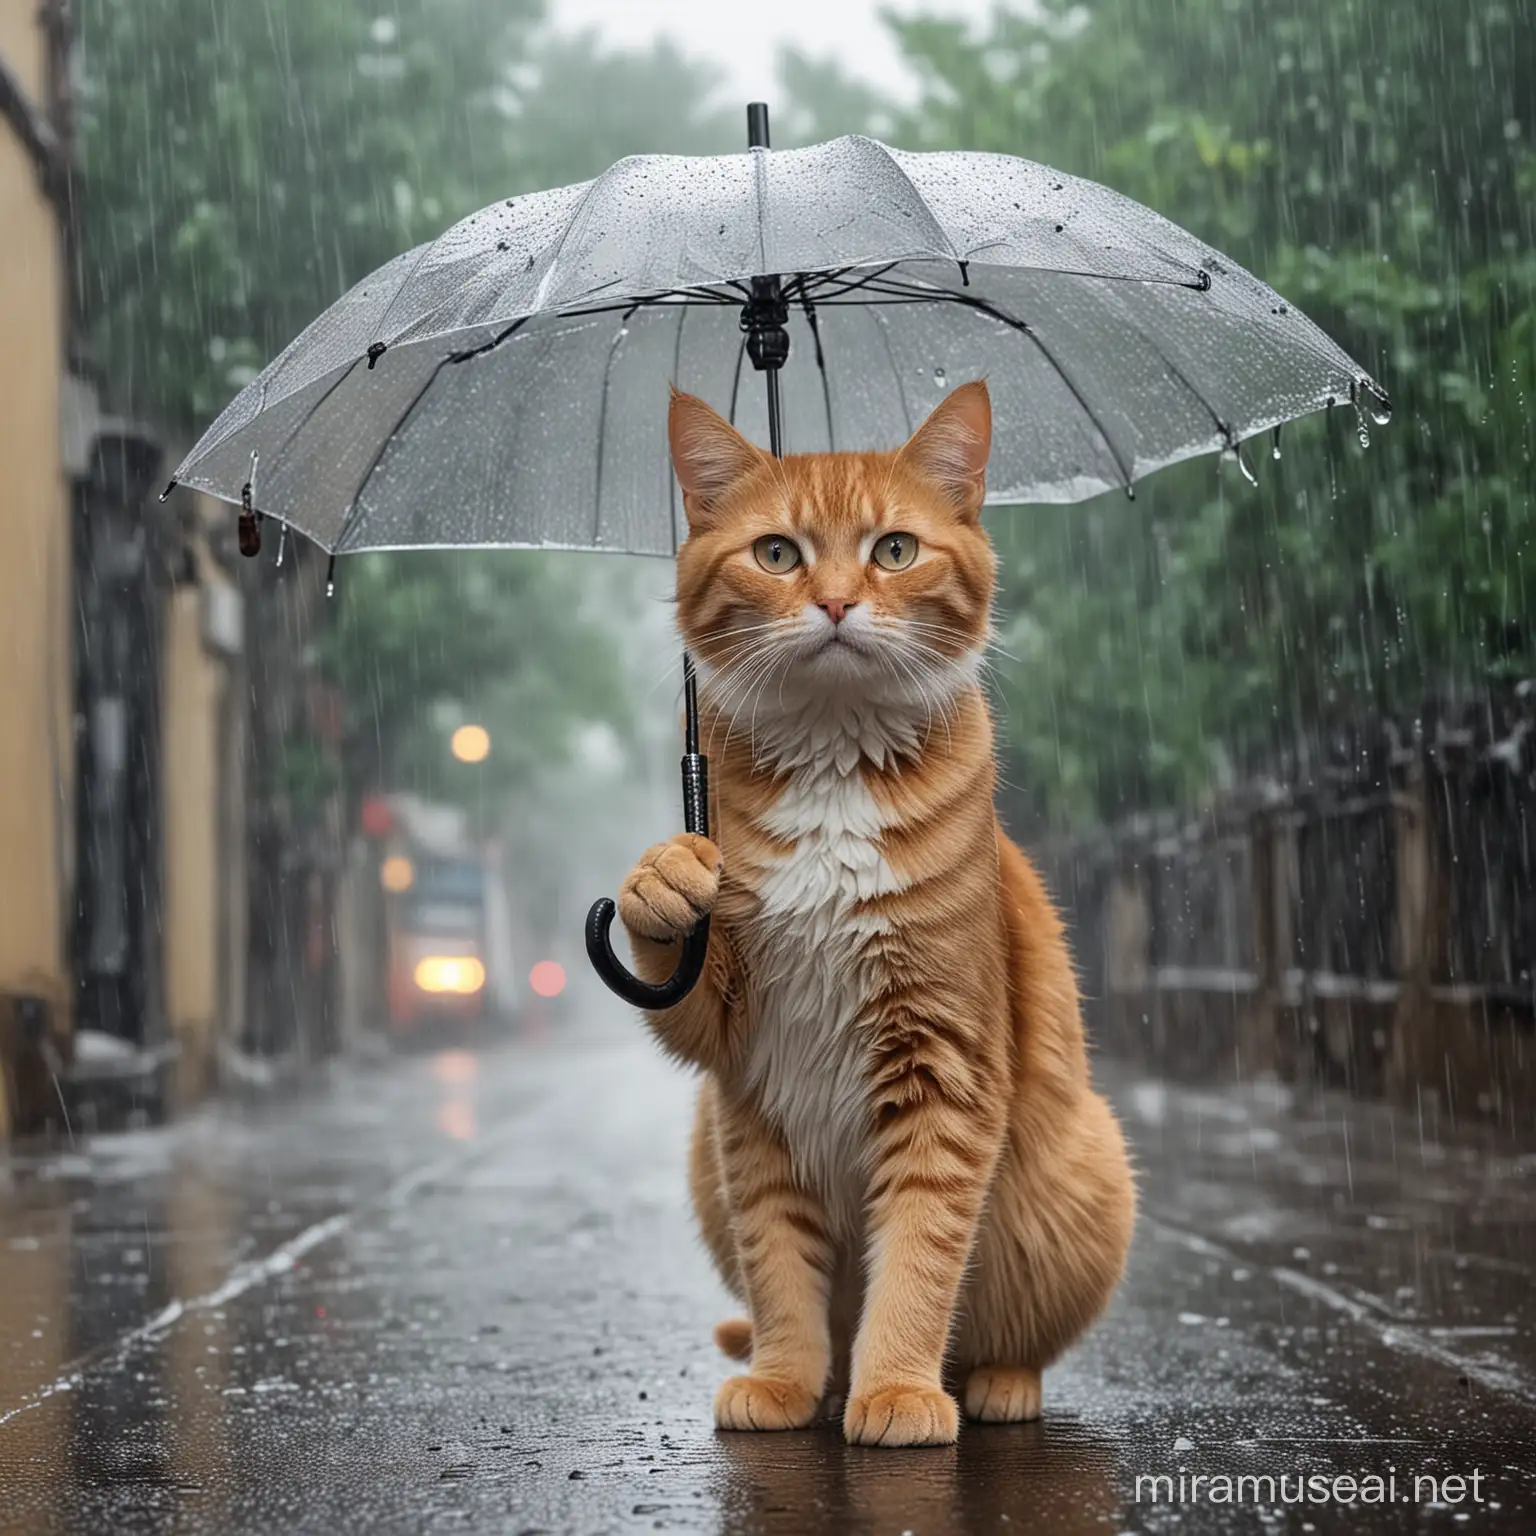 Cat Holding Umbrella in Rainy Weather